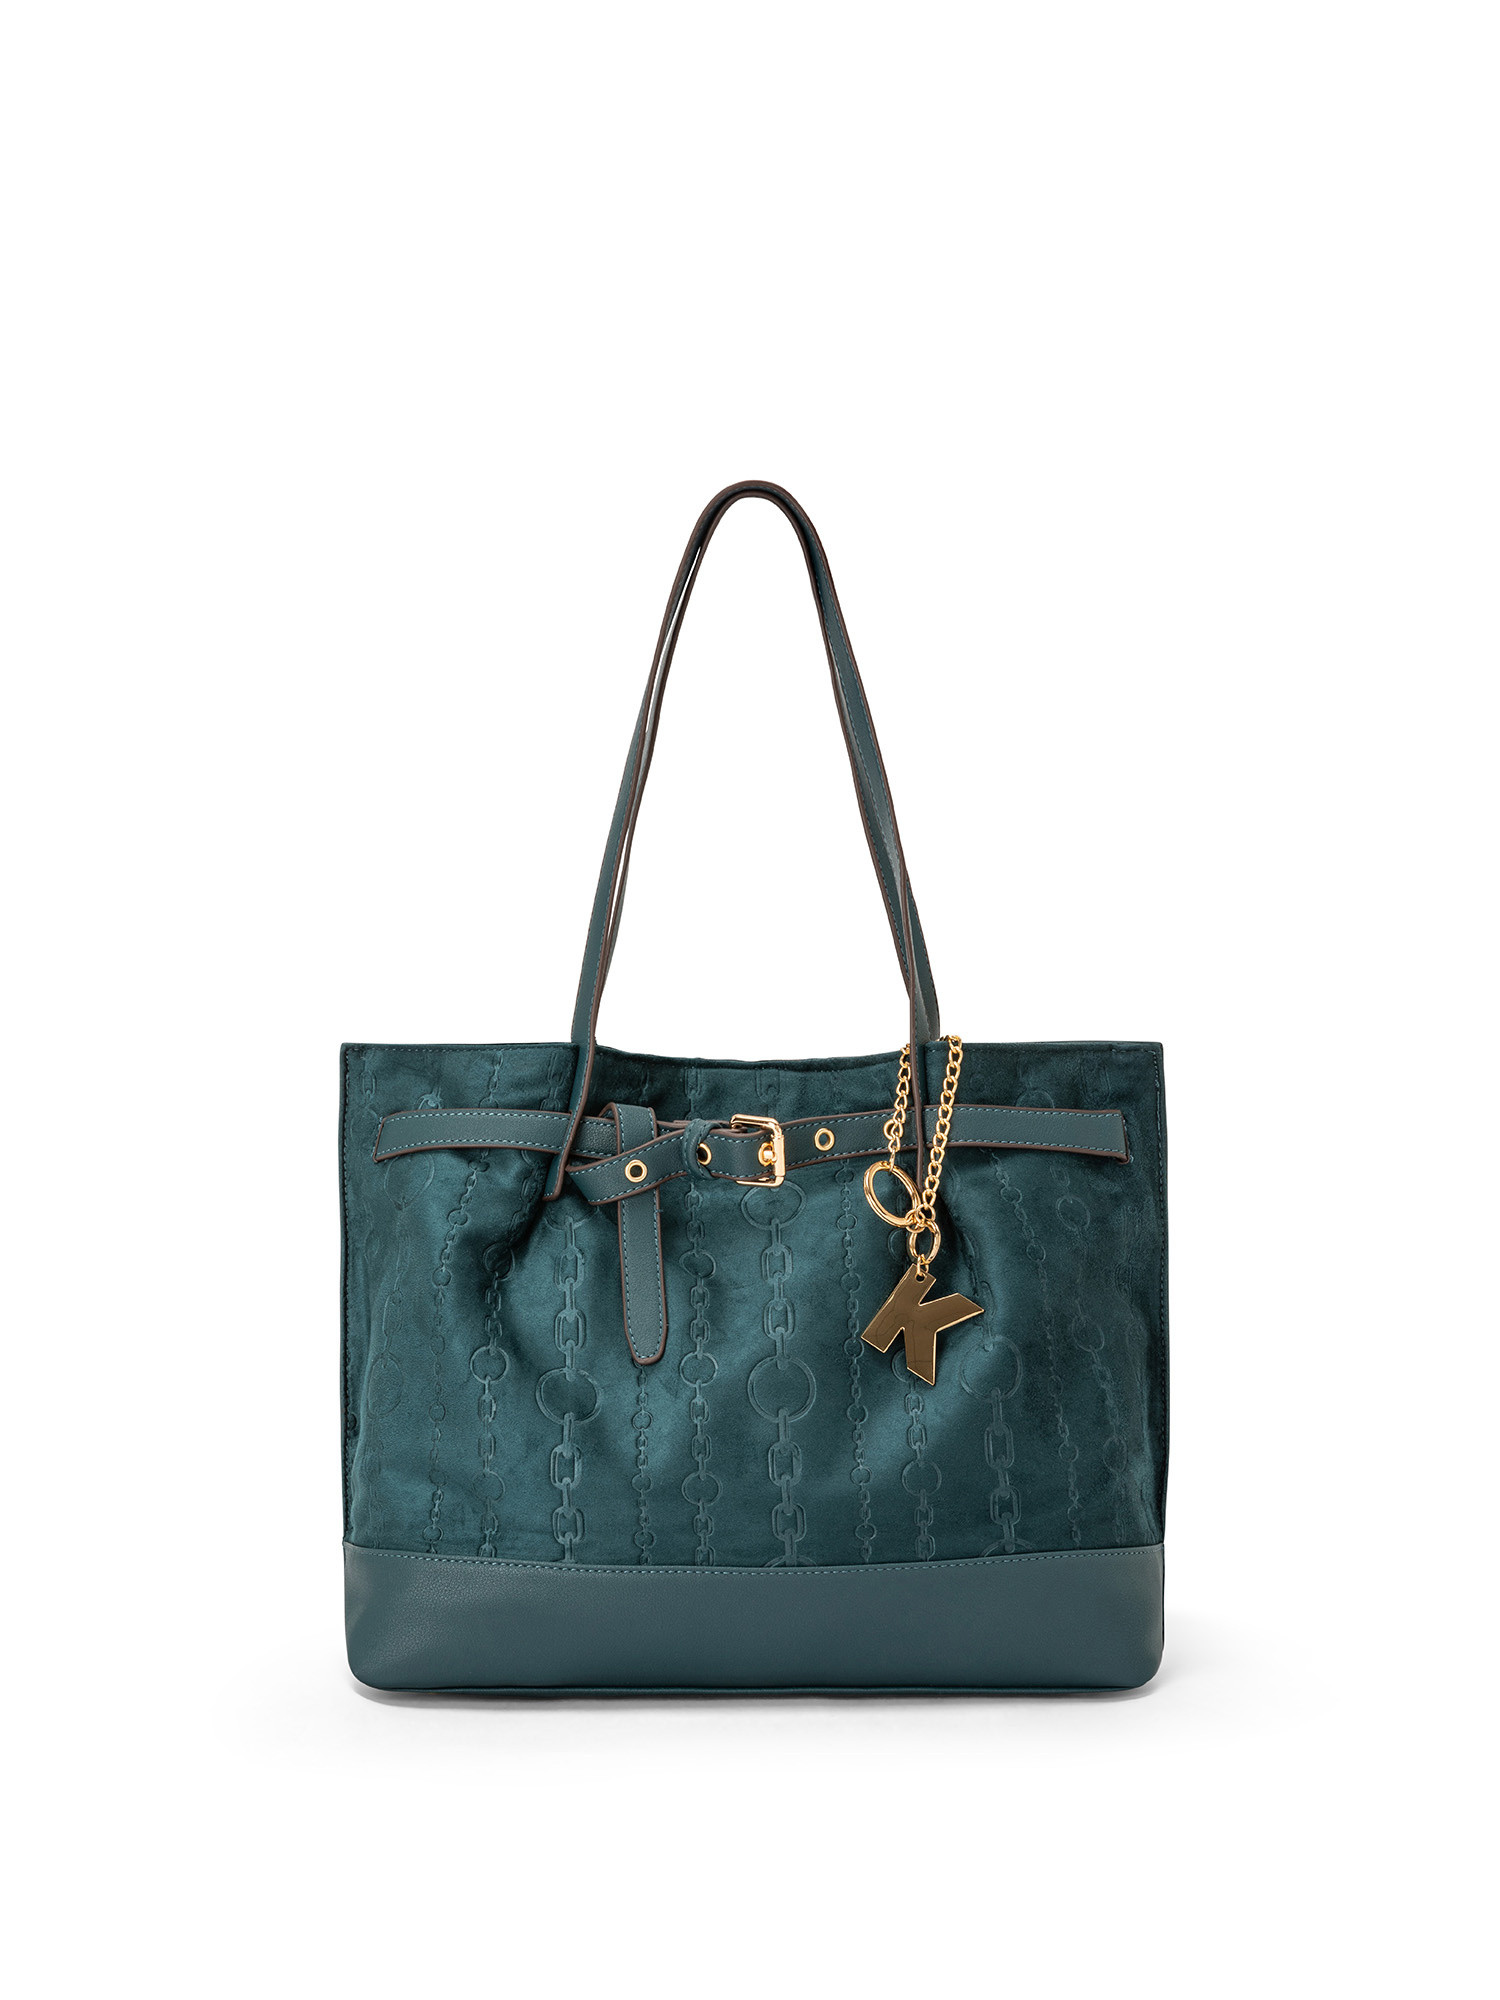 Koan - Shopping bag con stampa, Verde ottanio, large image number 0